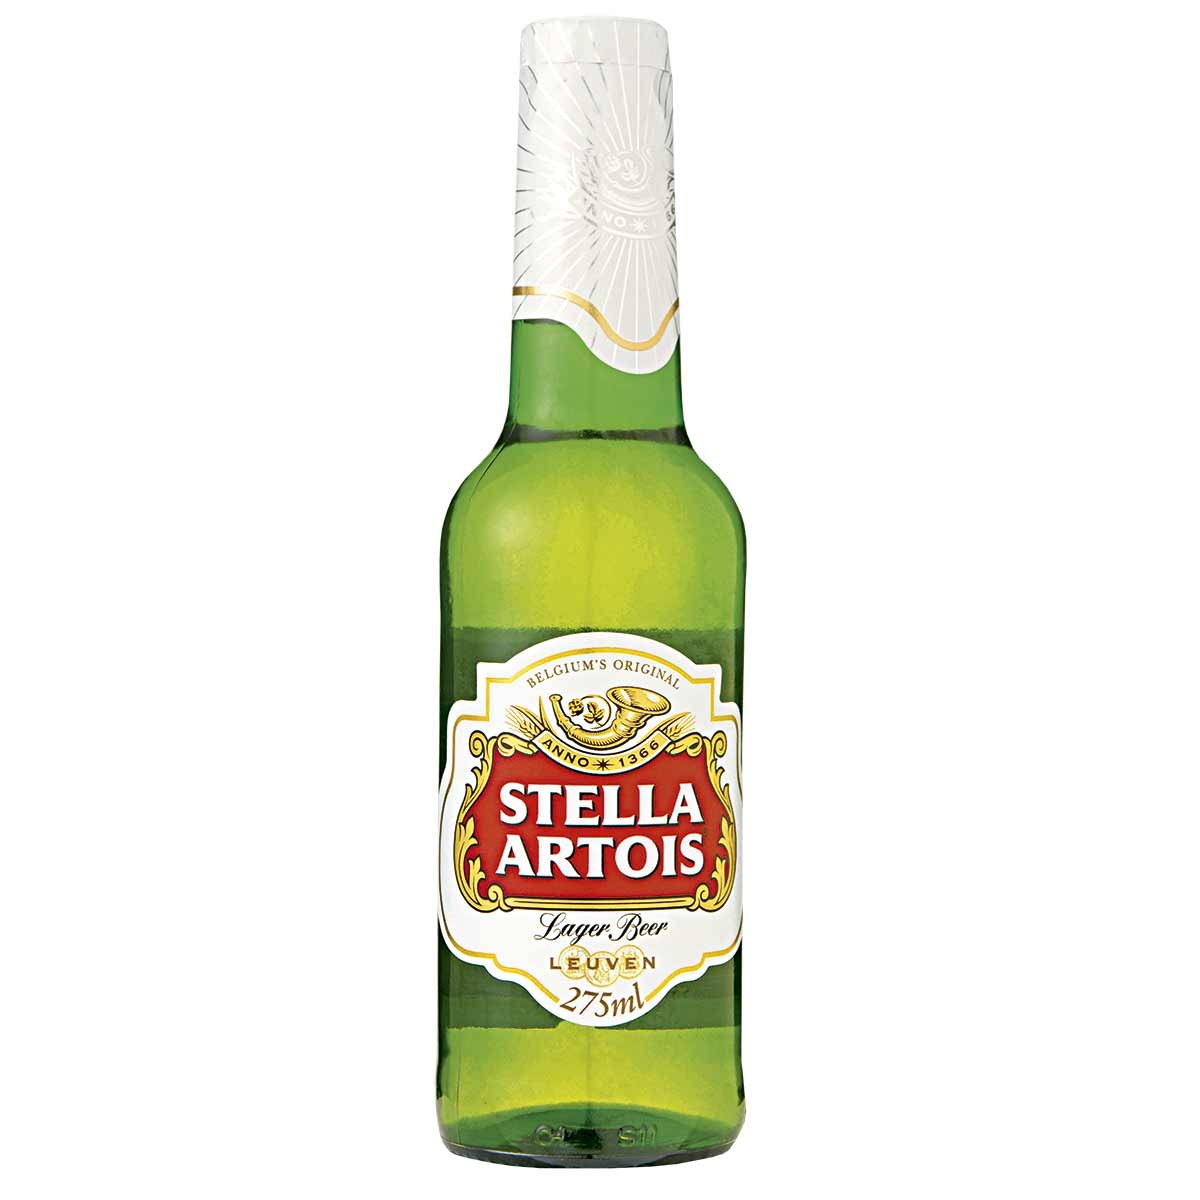 Foto do produto Cerveja Stella Artois